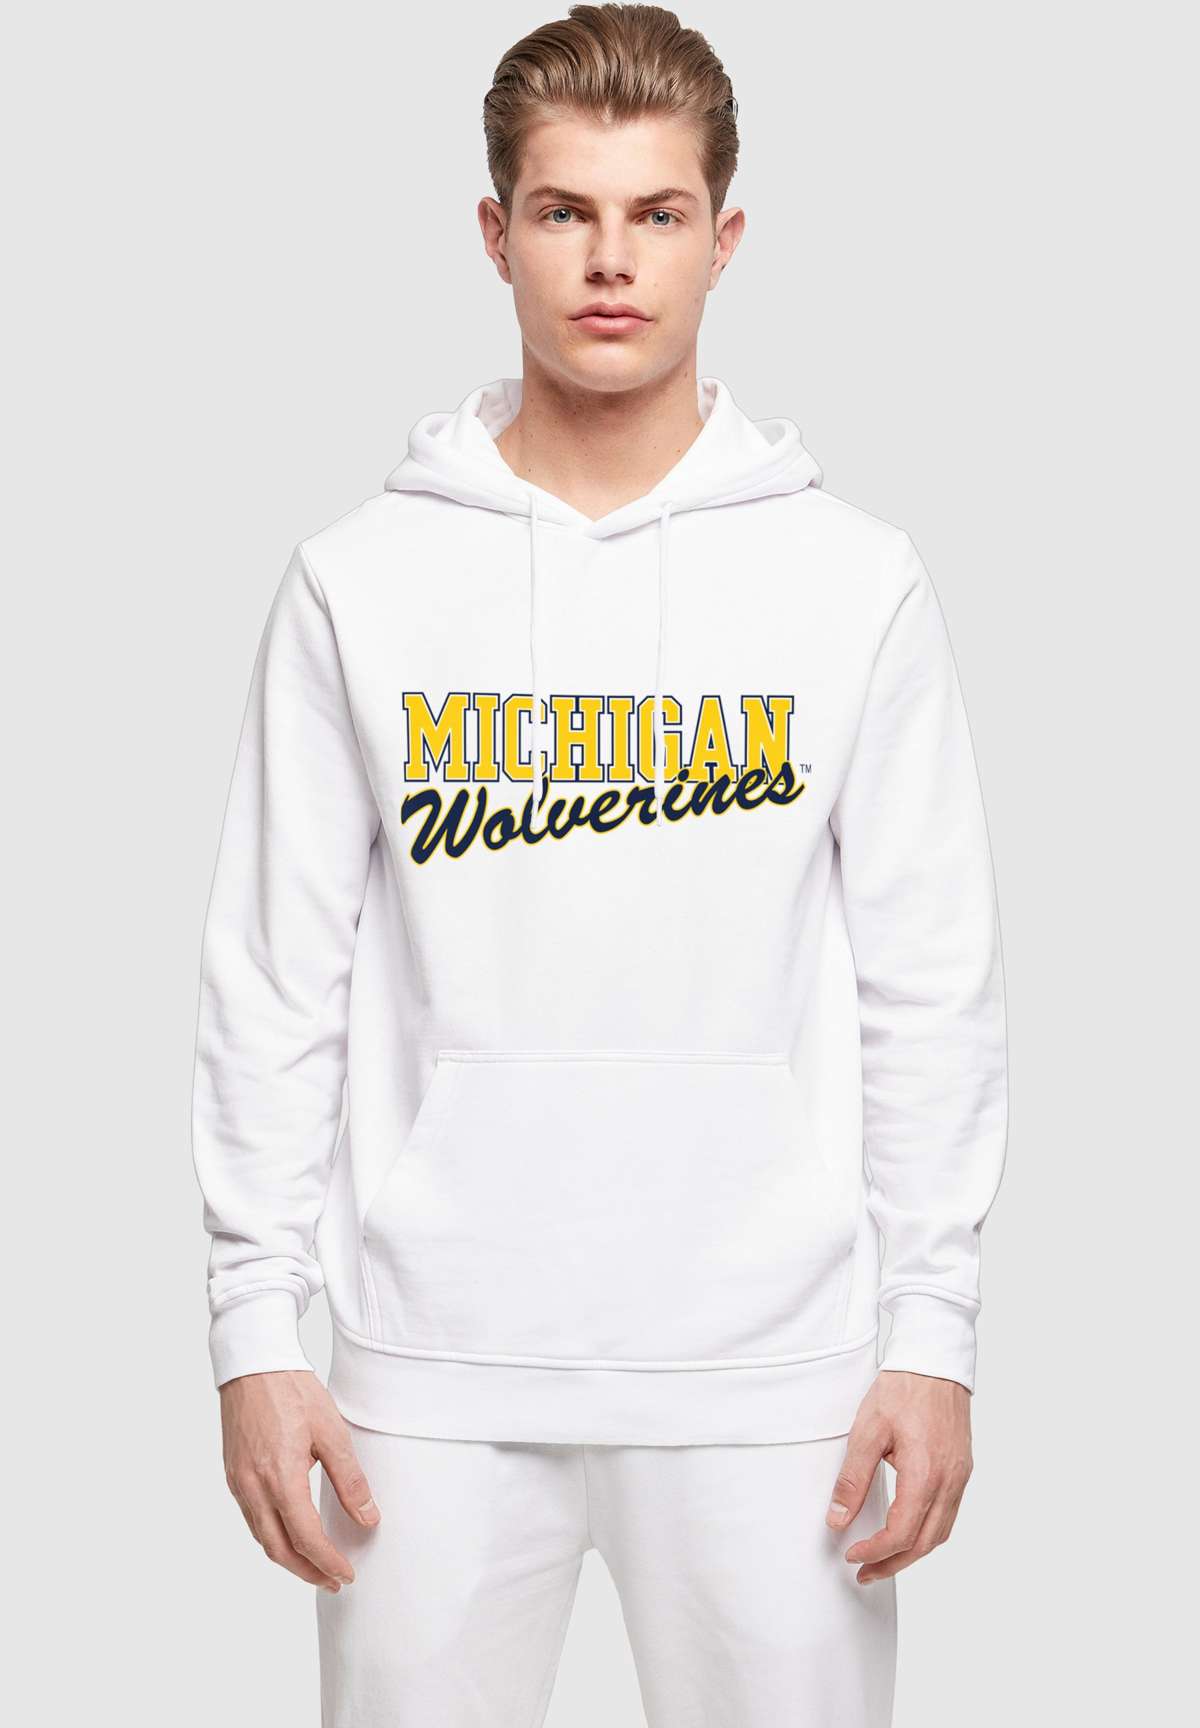 Пуловер с капюшоном MICHIGAN WOLVERINES